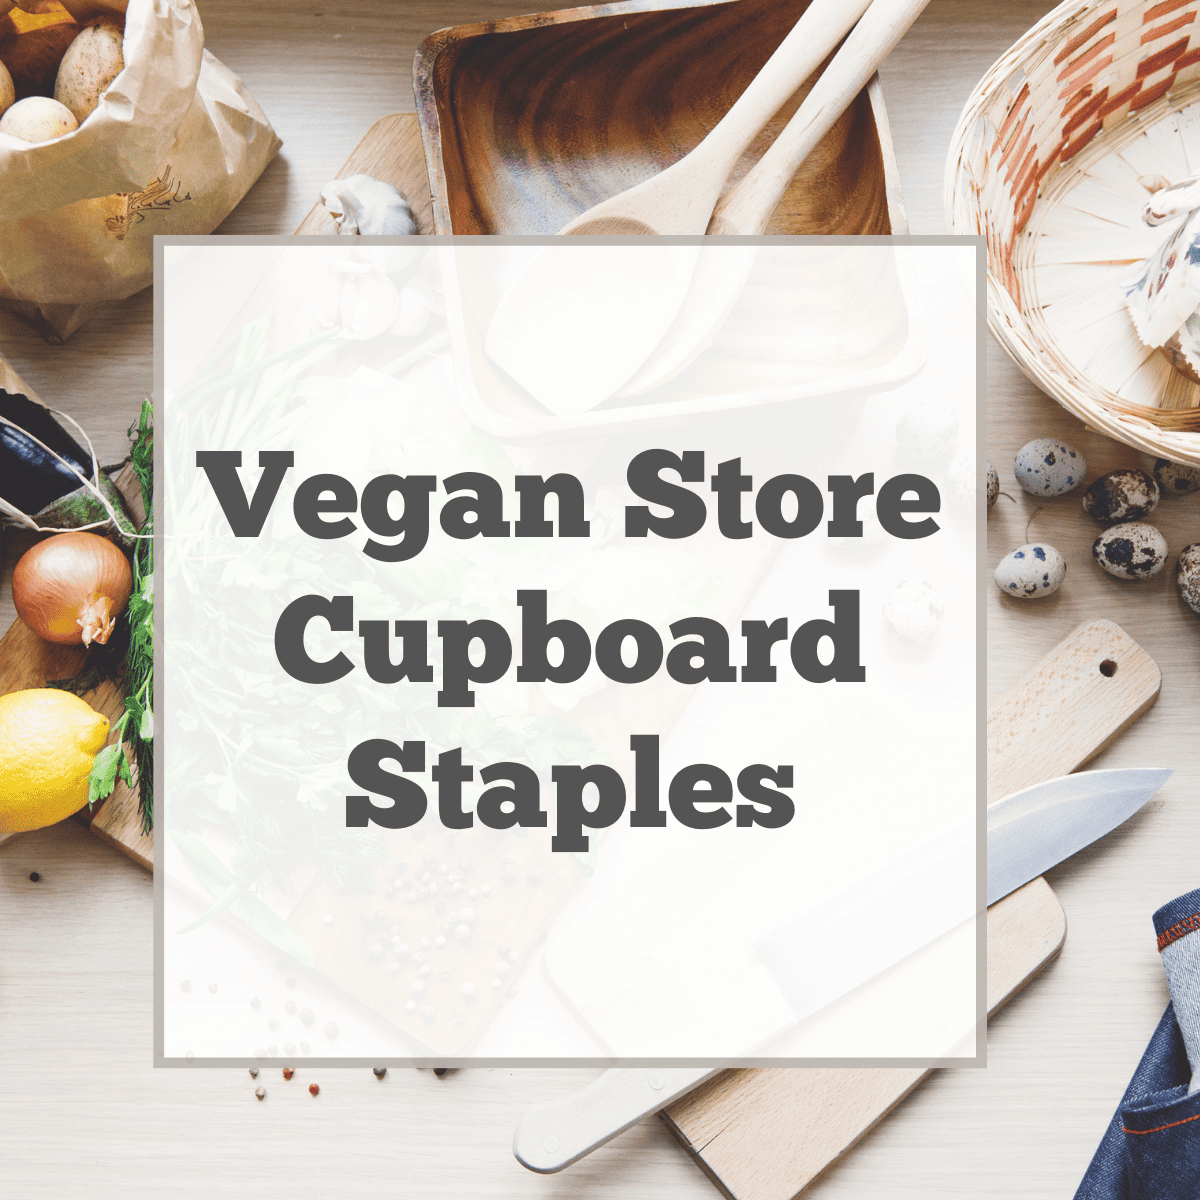 Vegan Store Cupboard Staples and my Pasta Puttanesca Recipe